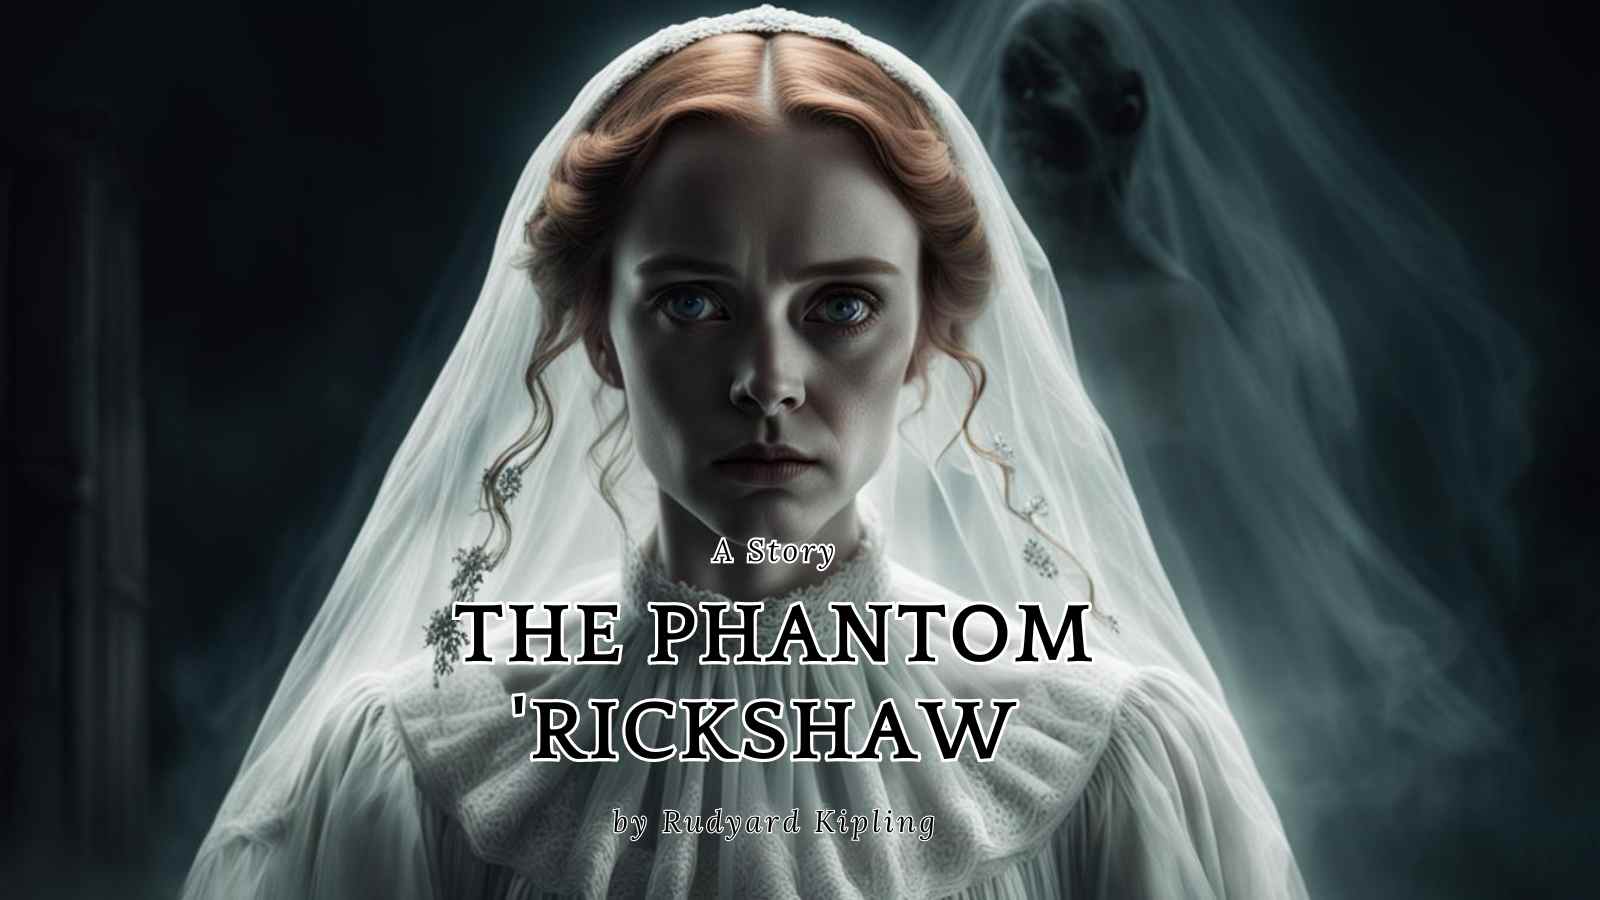 The Phantom 'Rickshaw by Rudyard Kipling